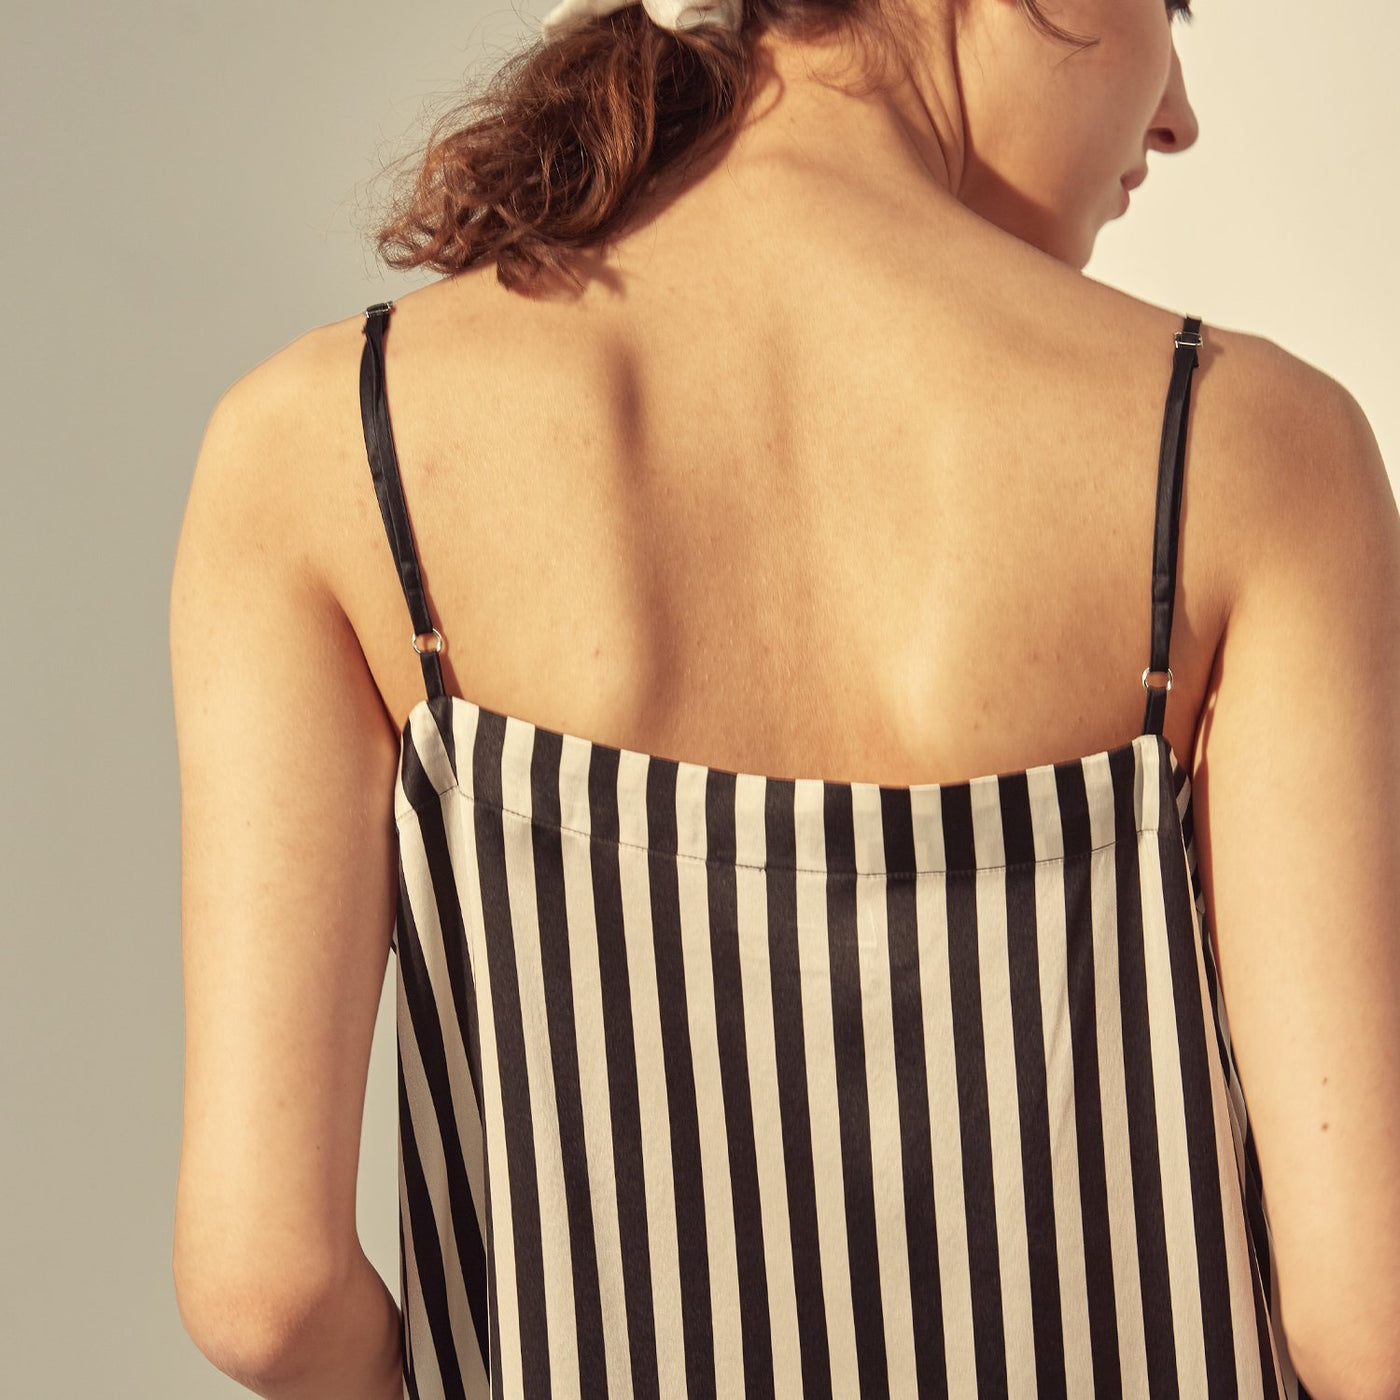 Not Just Pajama | Striped Silk Slip Dress - Black